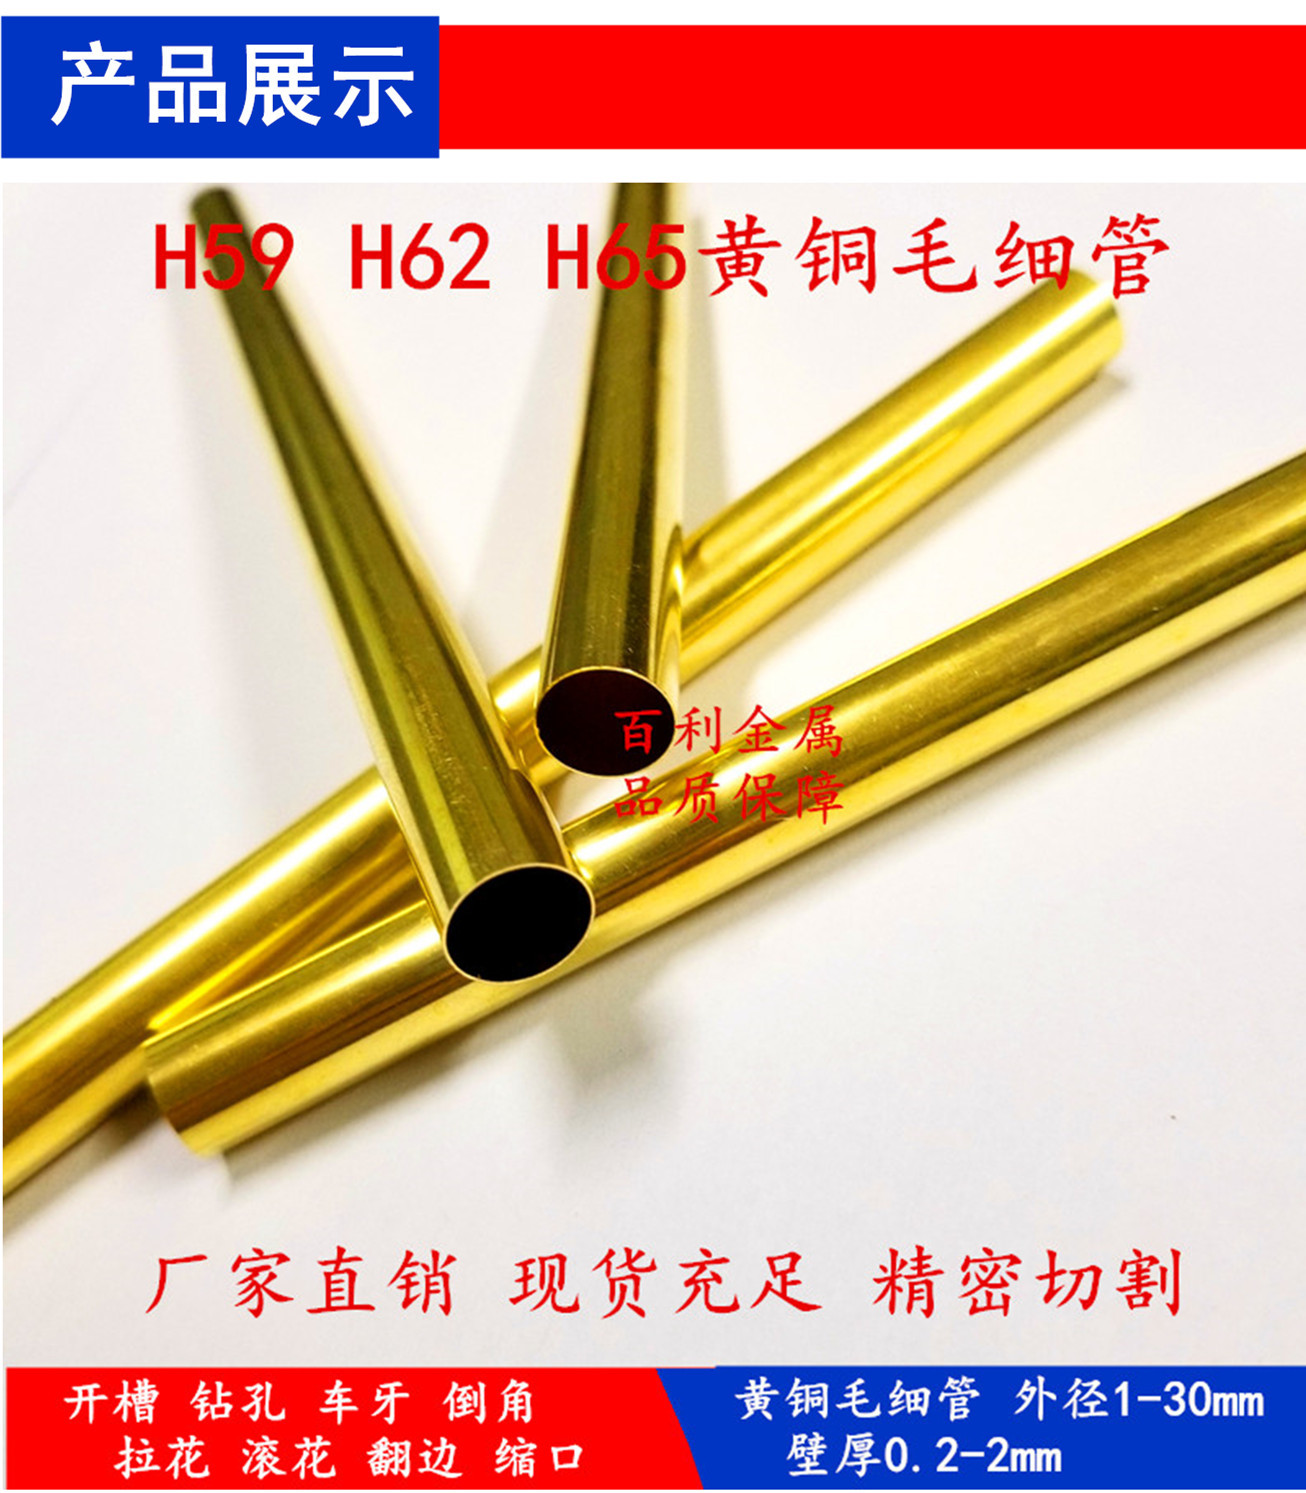 H65黄铜管 黄铜毛细管 电镀 镀金 镀银 防氧化 厂家直销示例图8